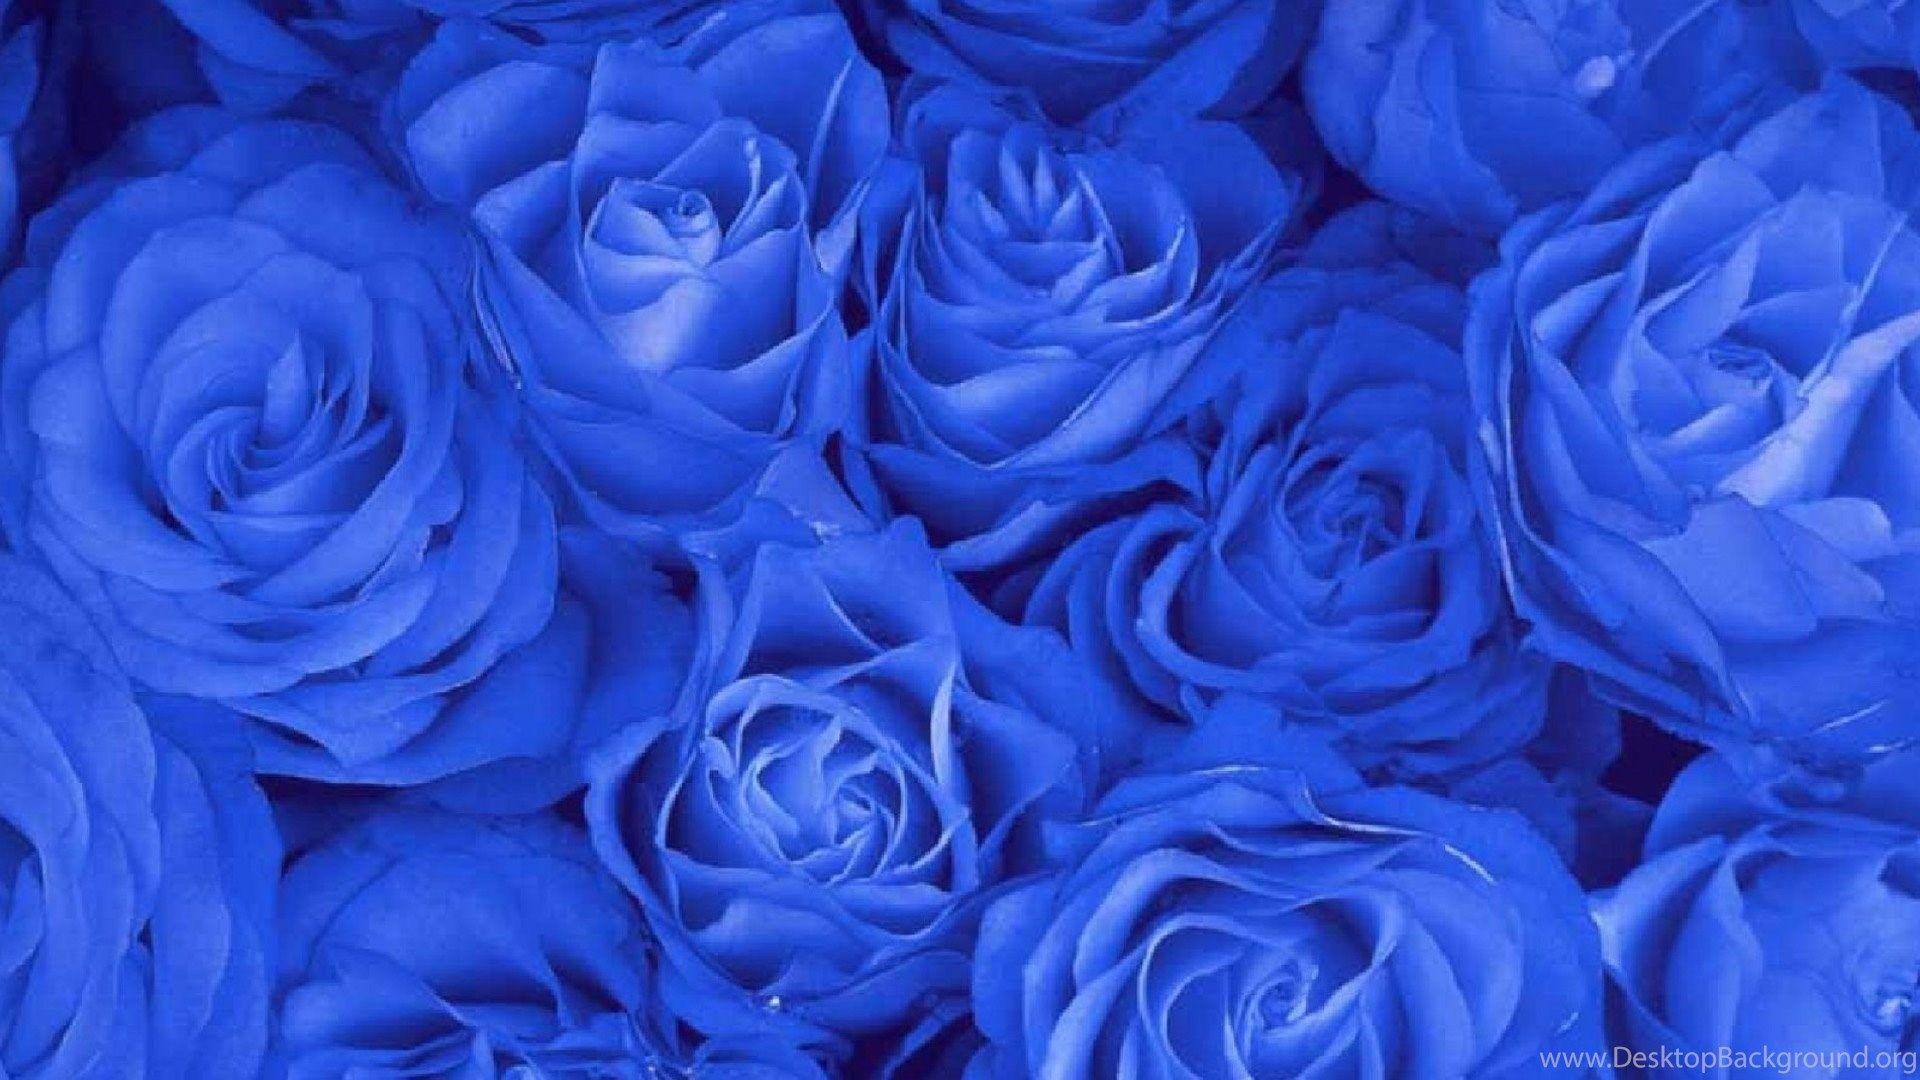 Royal Blue Flowers HD Wallpapers - Top